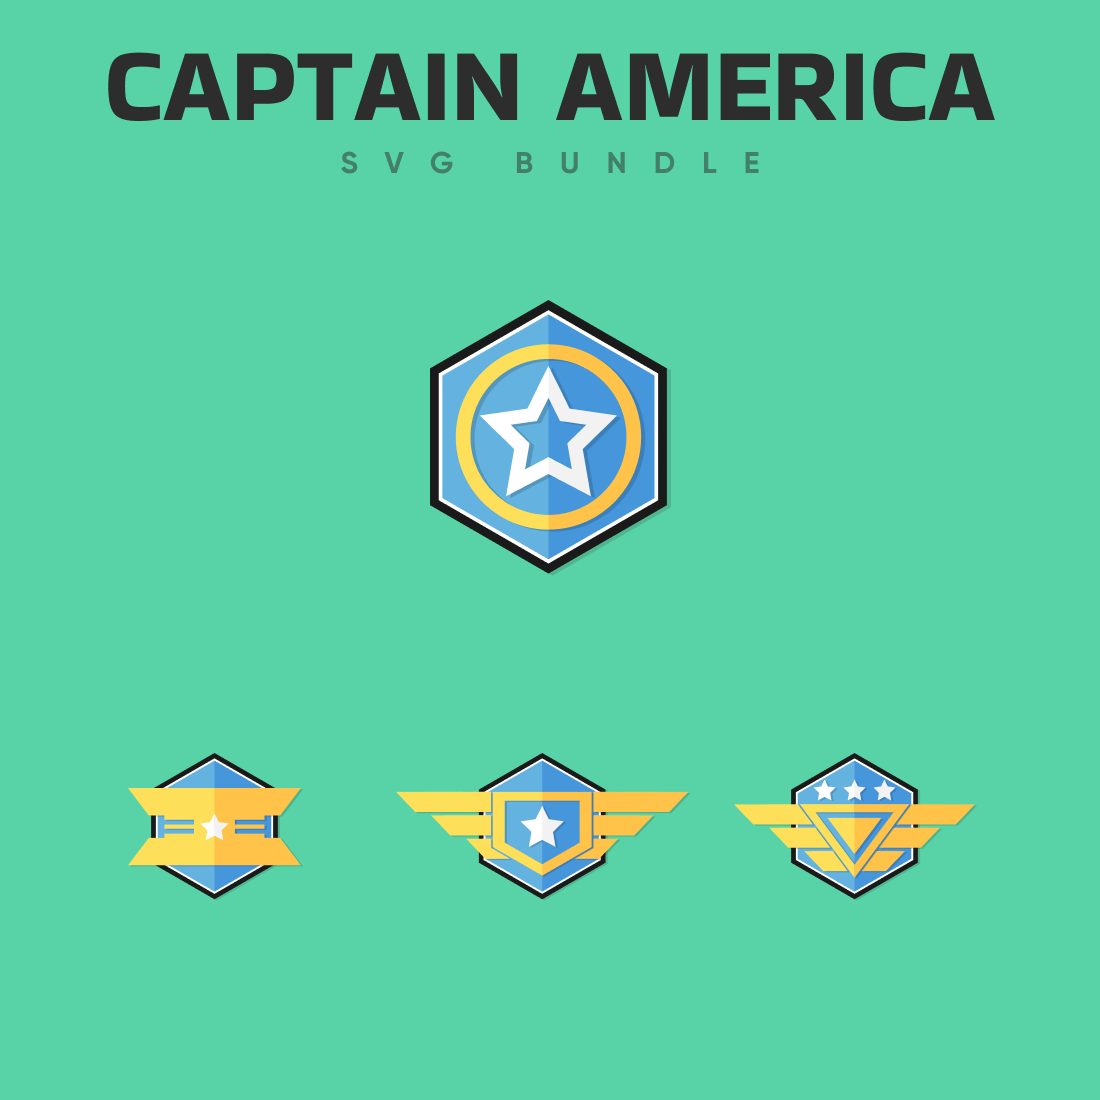 Captain America SVG.